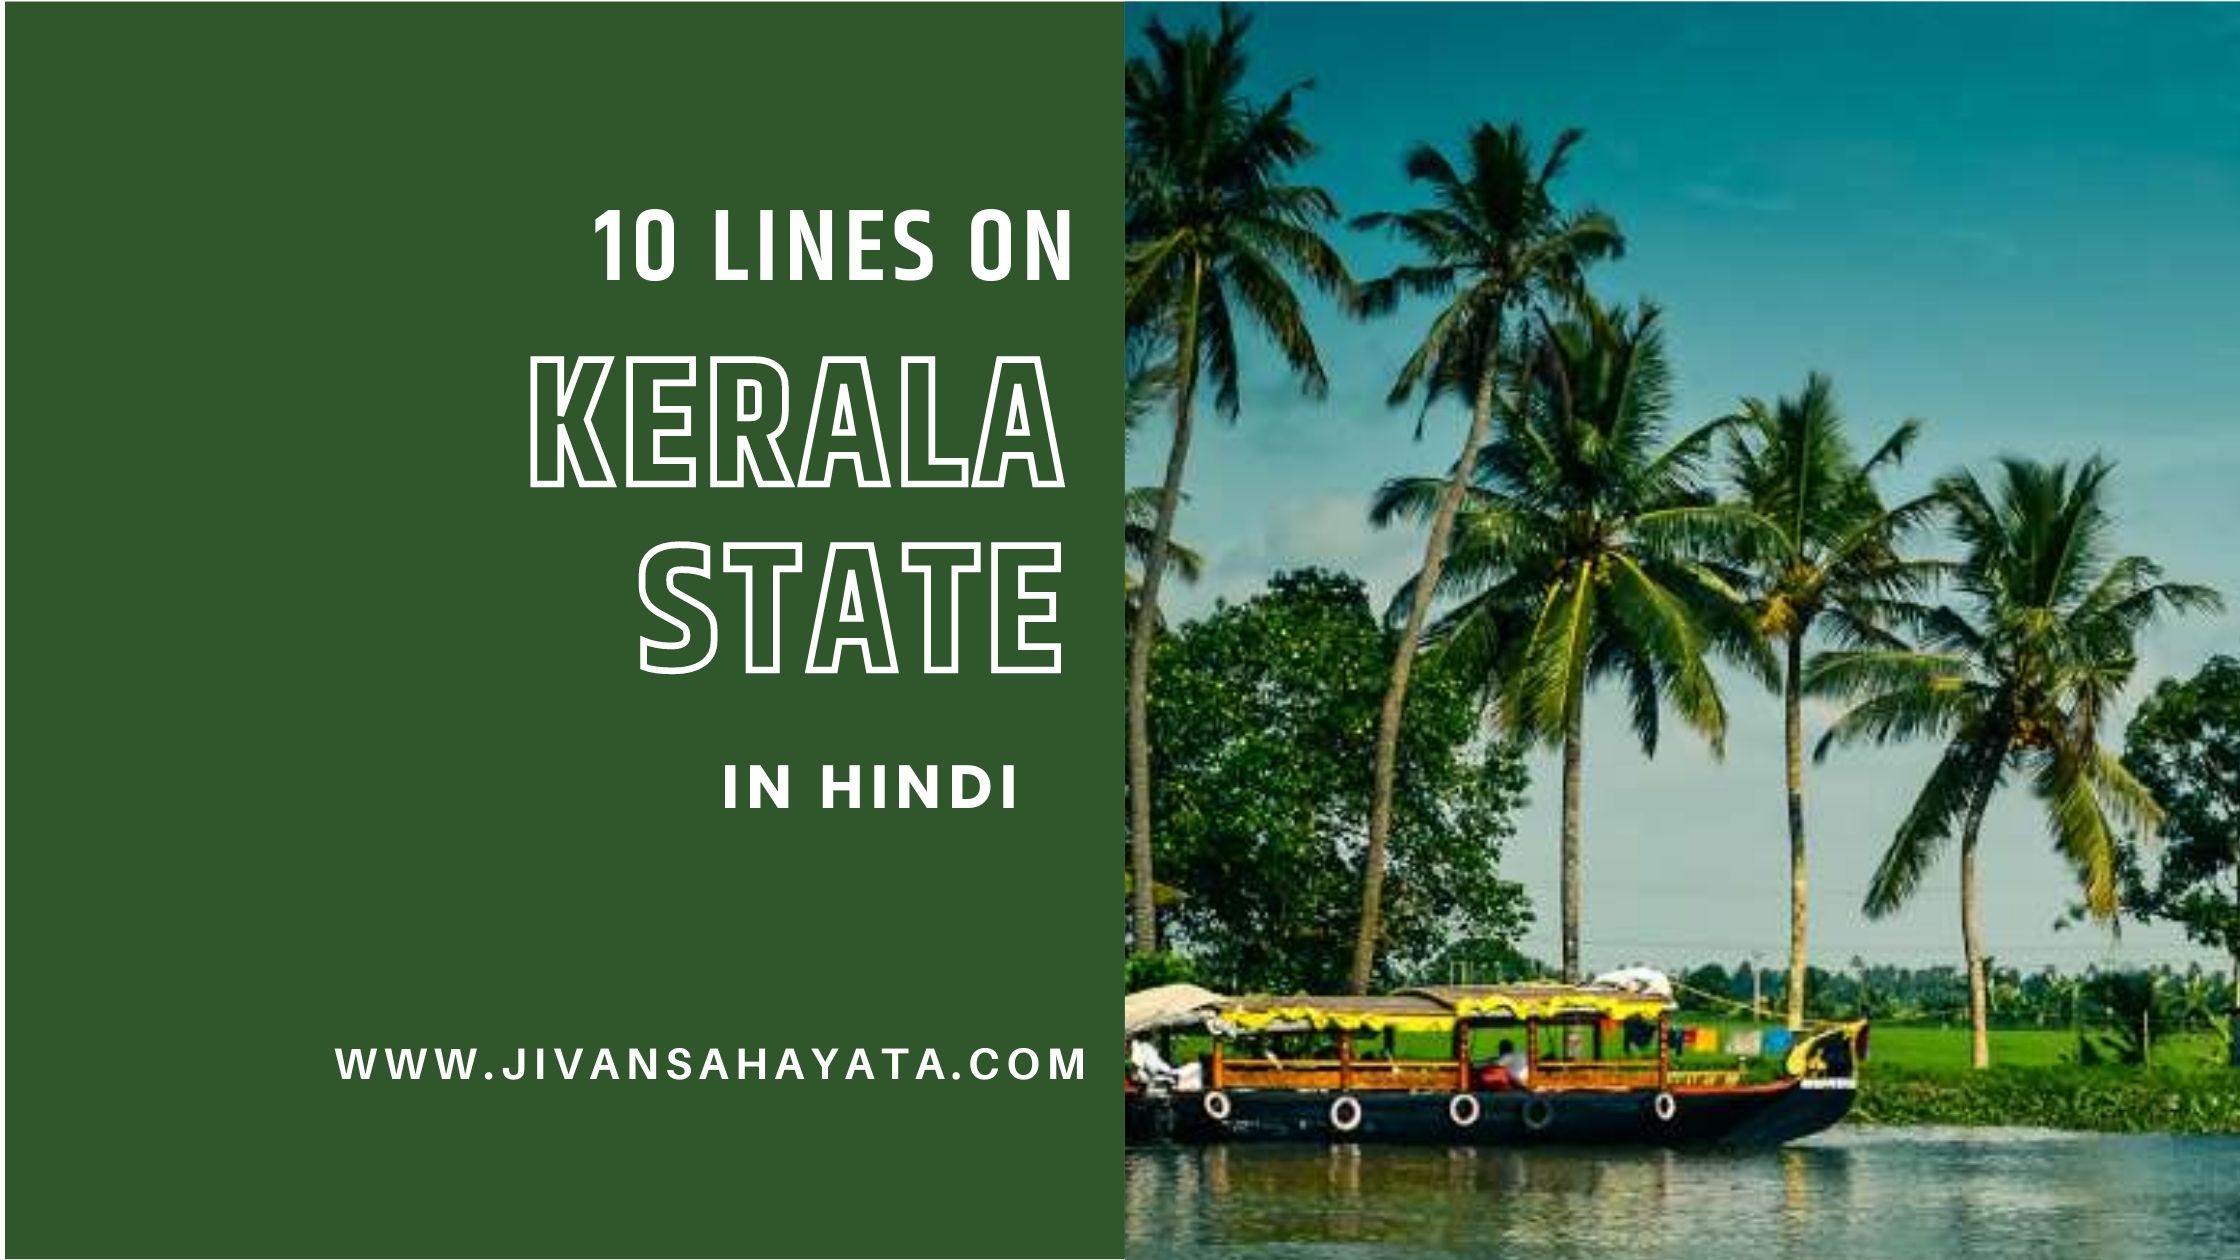 10 lines on Kerala State in Hindi - केरल राज्य पर 10 वाक्य का शोर्ट निबंध